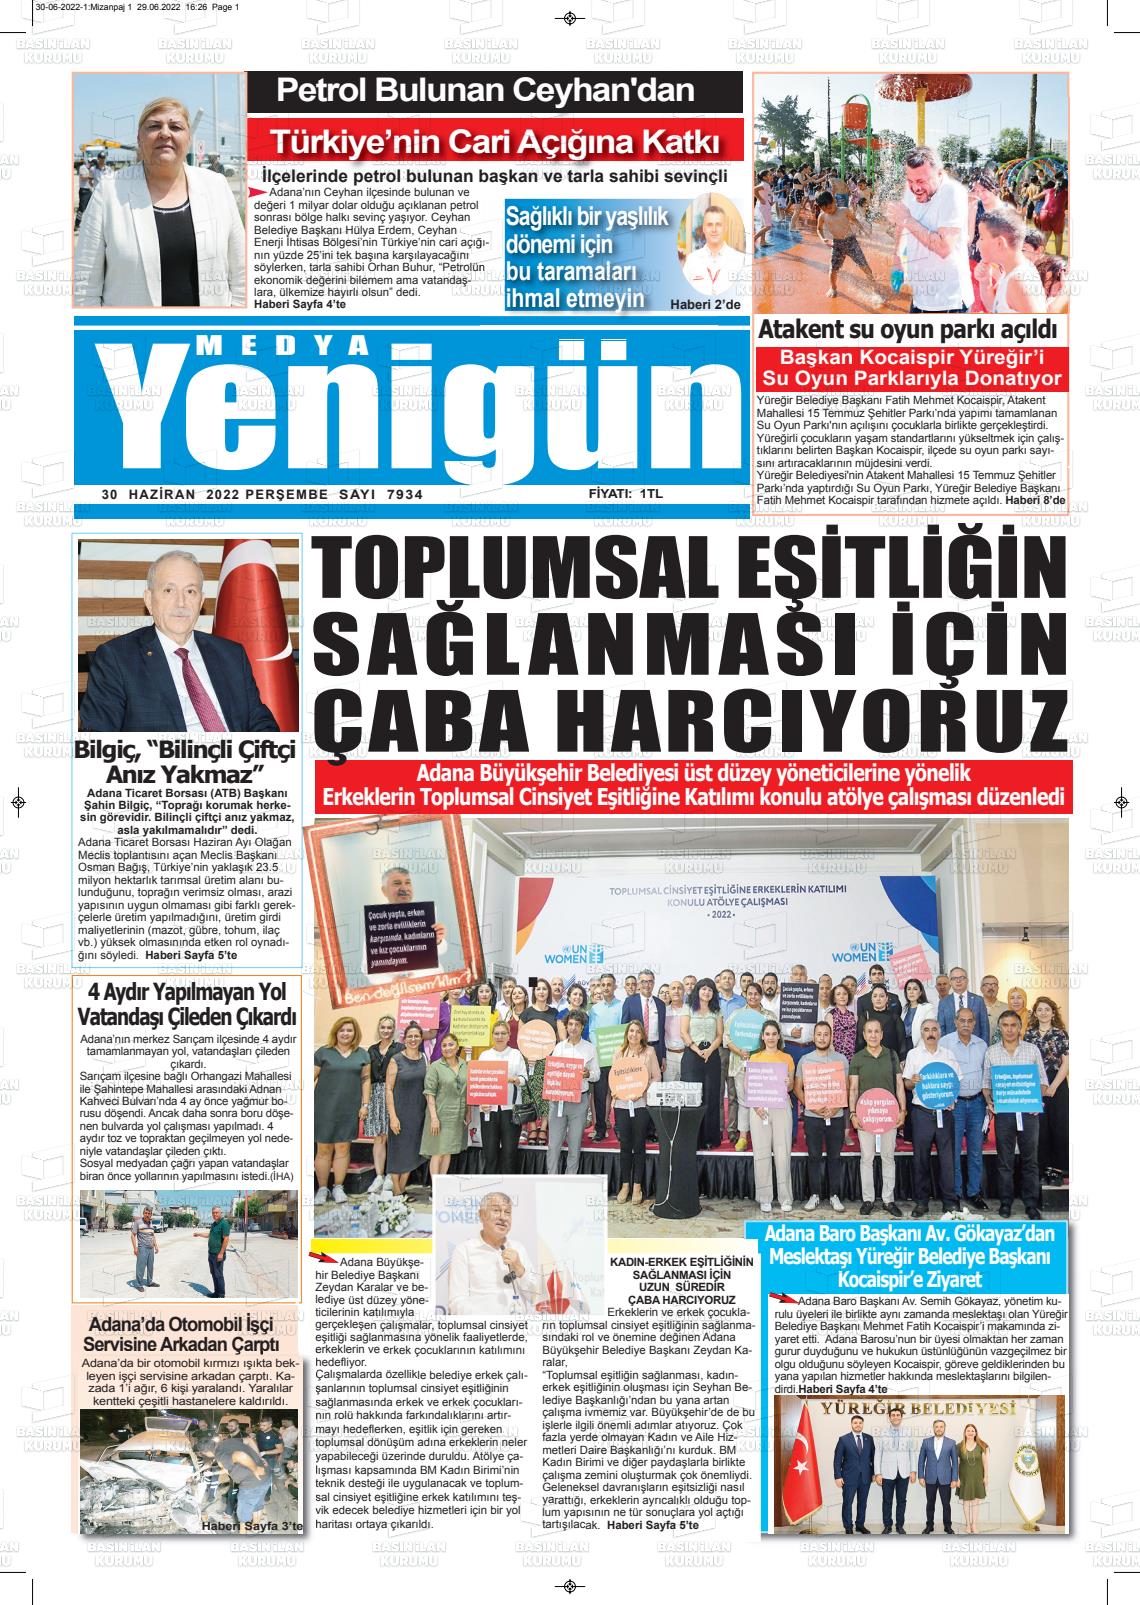 02 Temmuz 2022 Medya Yenigün Gazete Manşeti